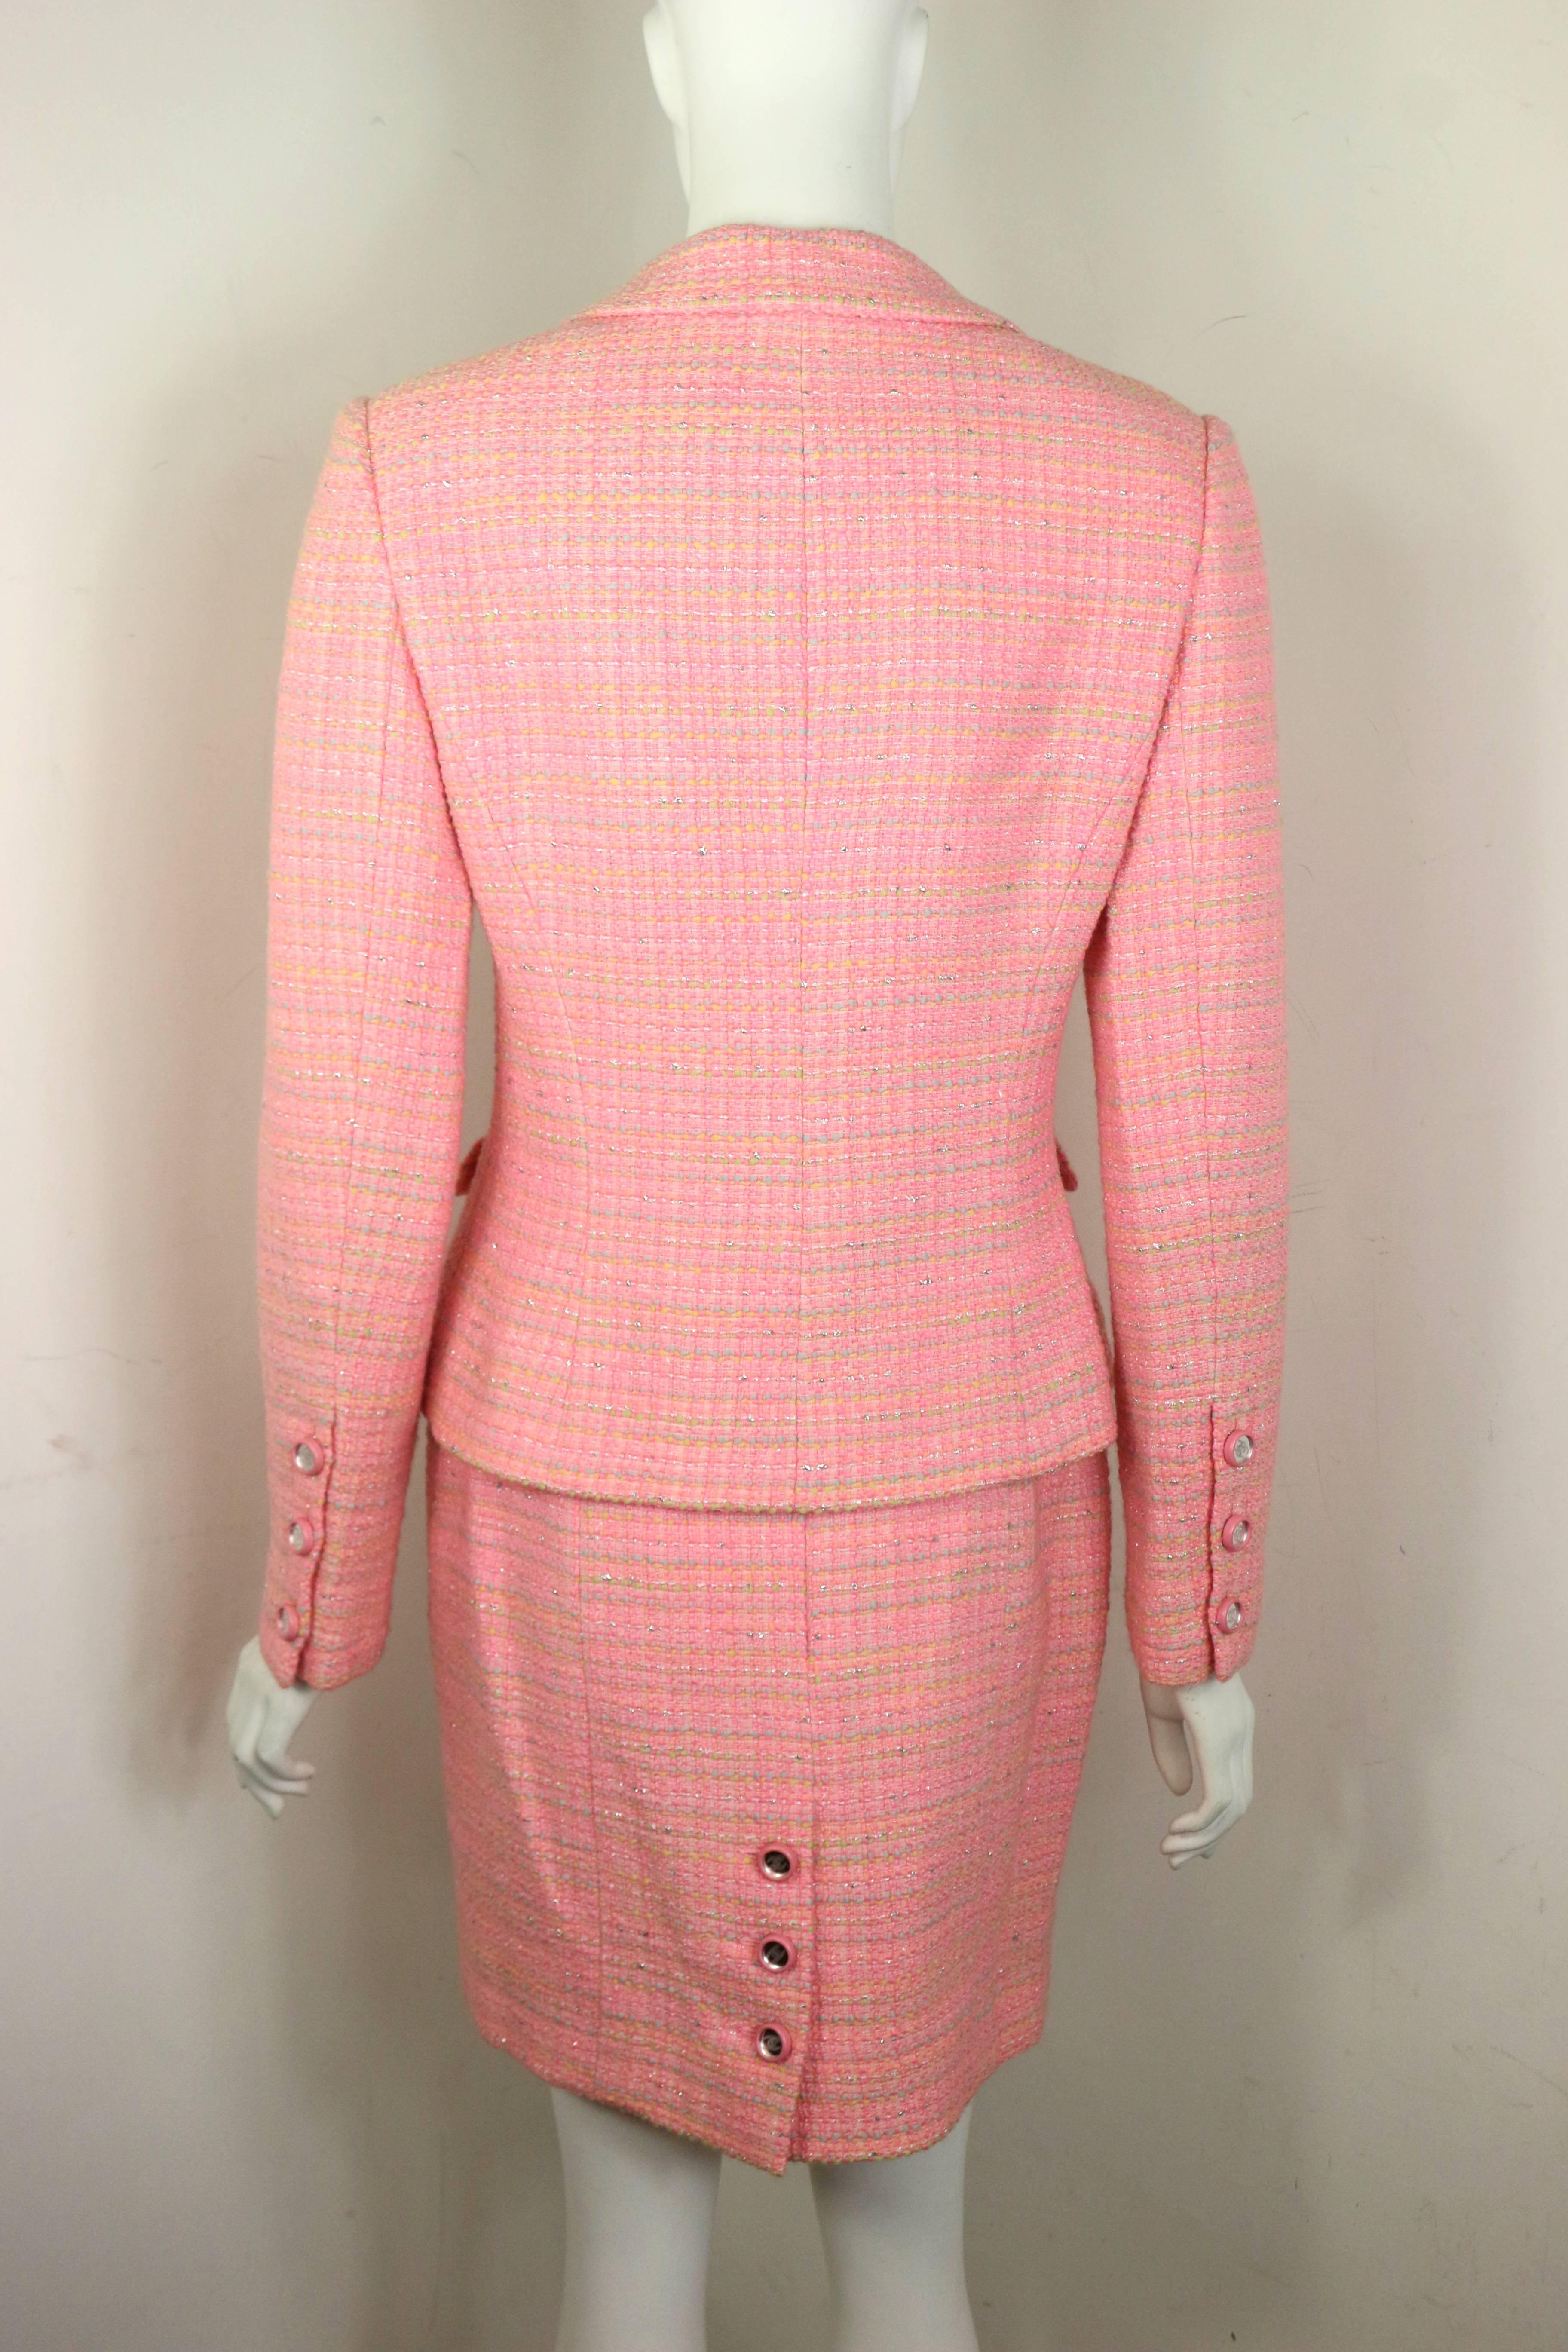 chanel pink tweed suit